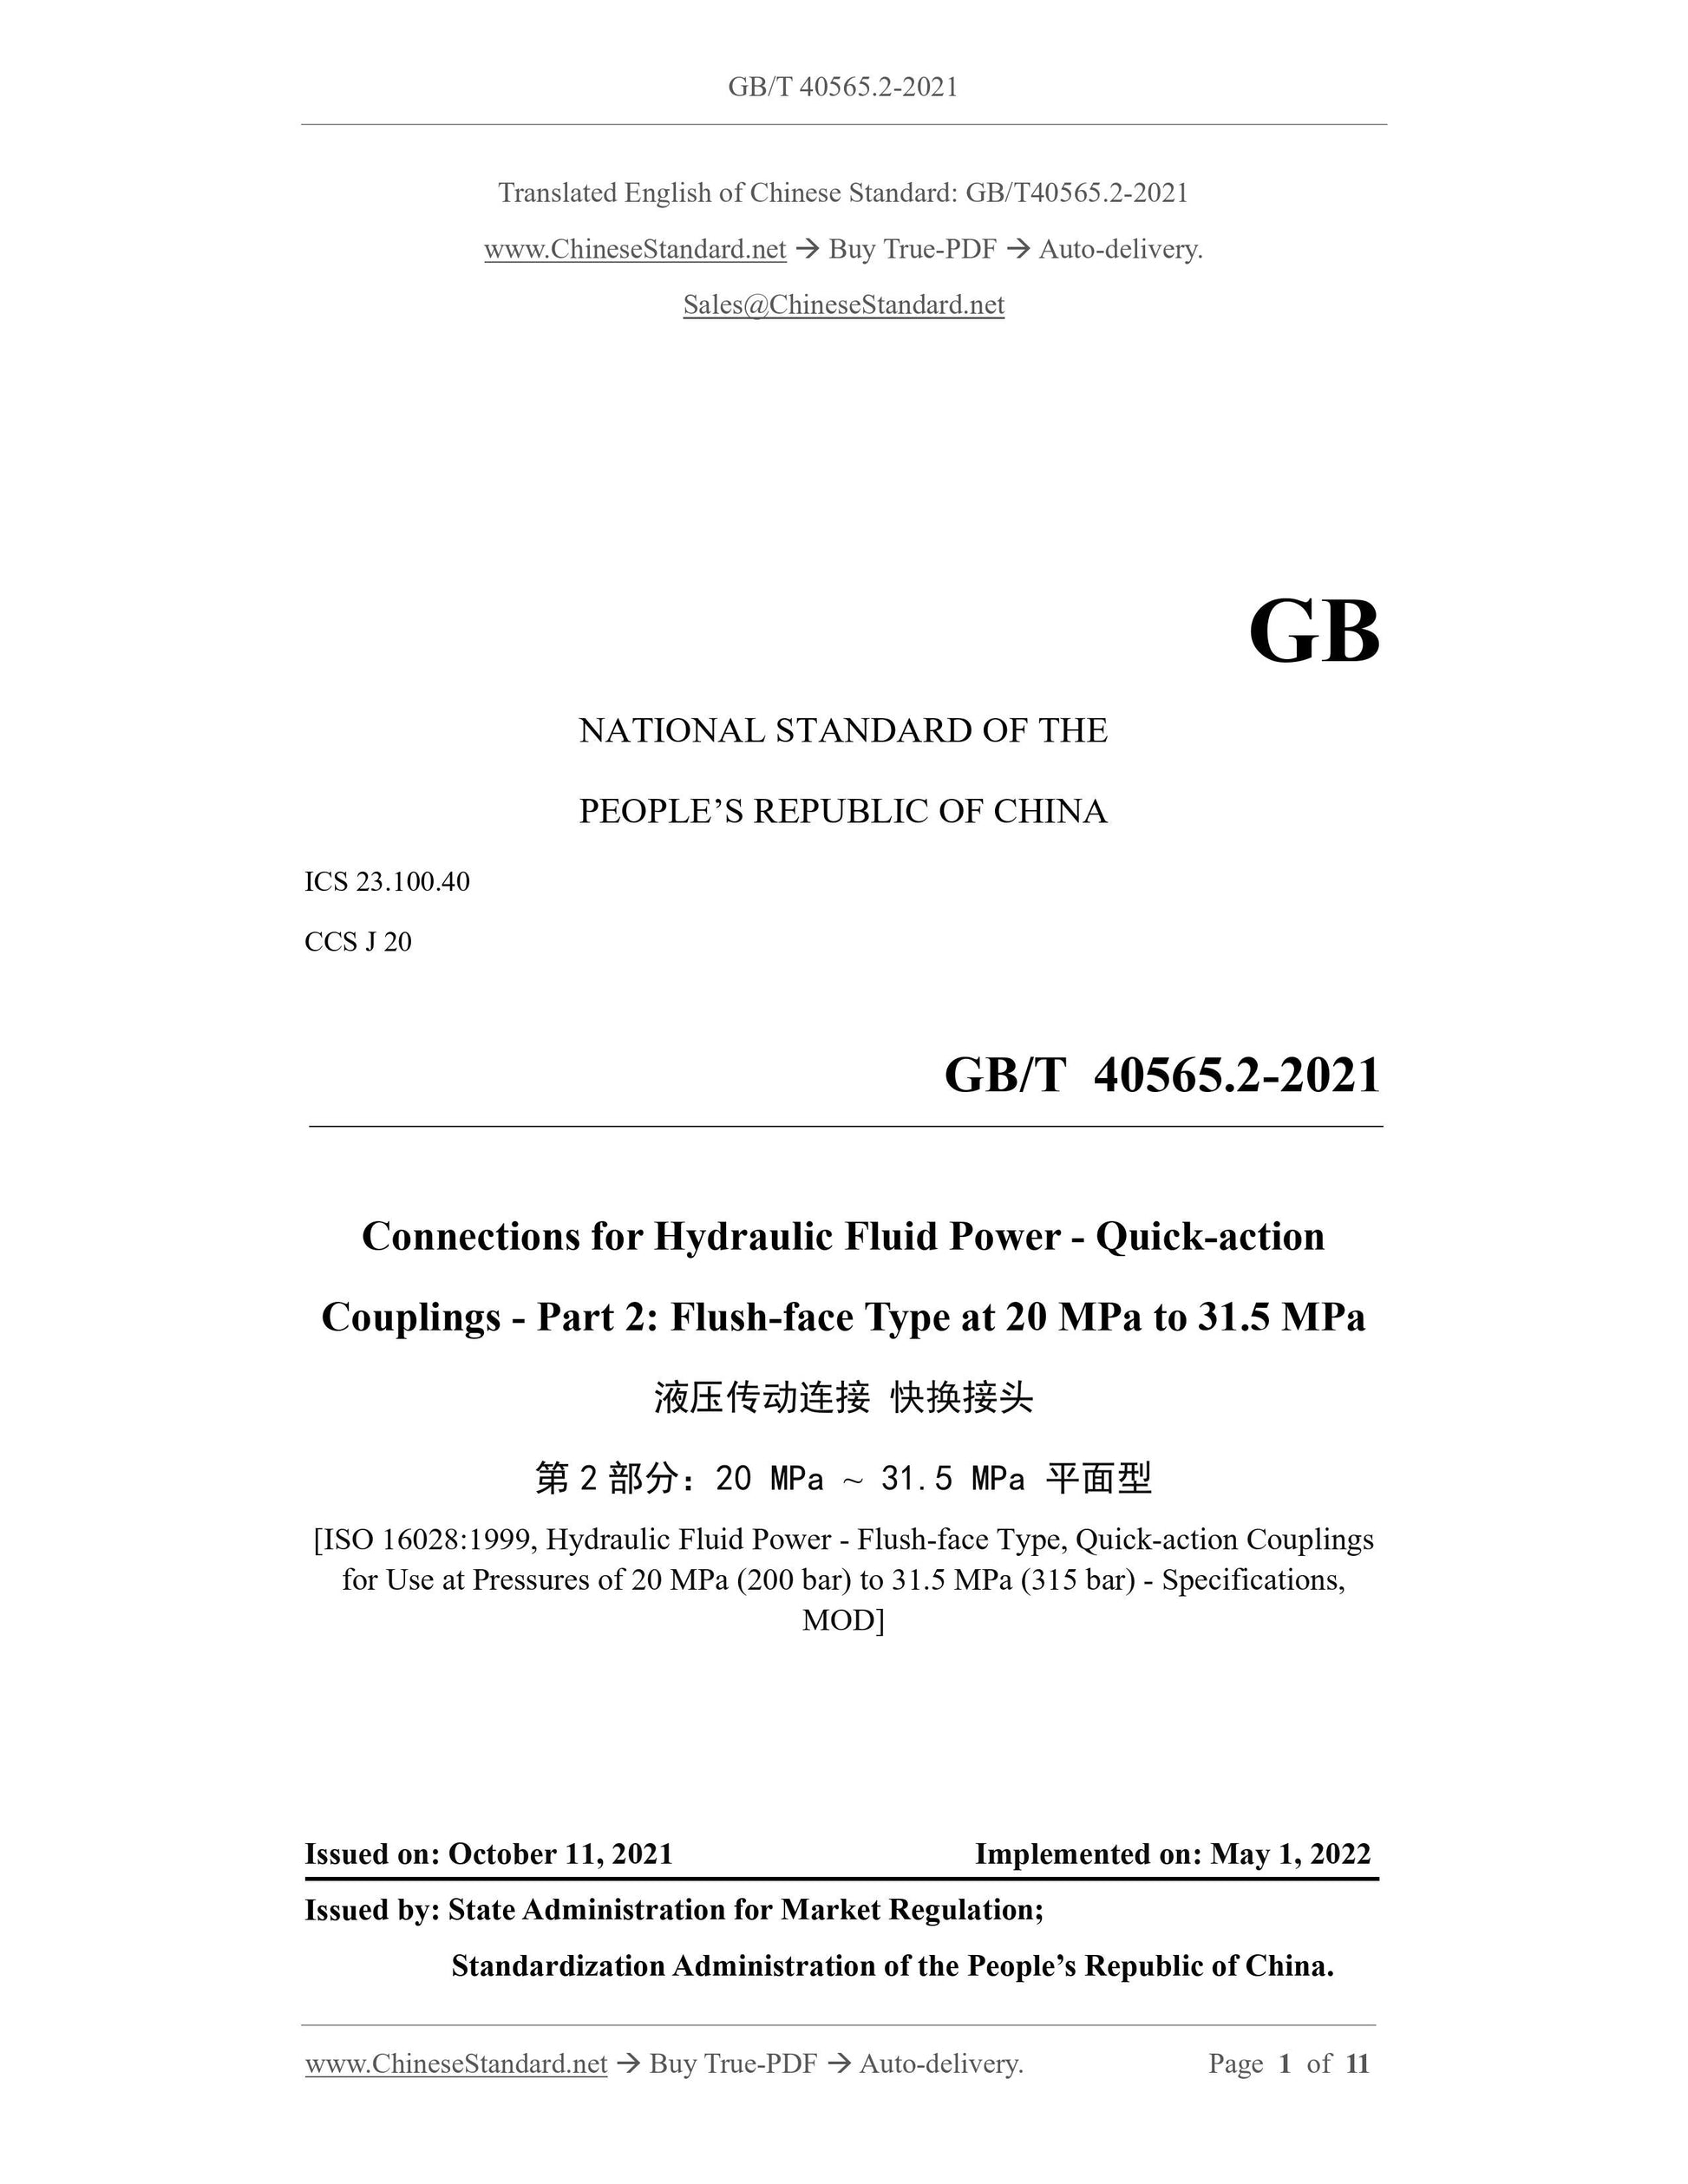 GBT40565.2-2021 Page 1